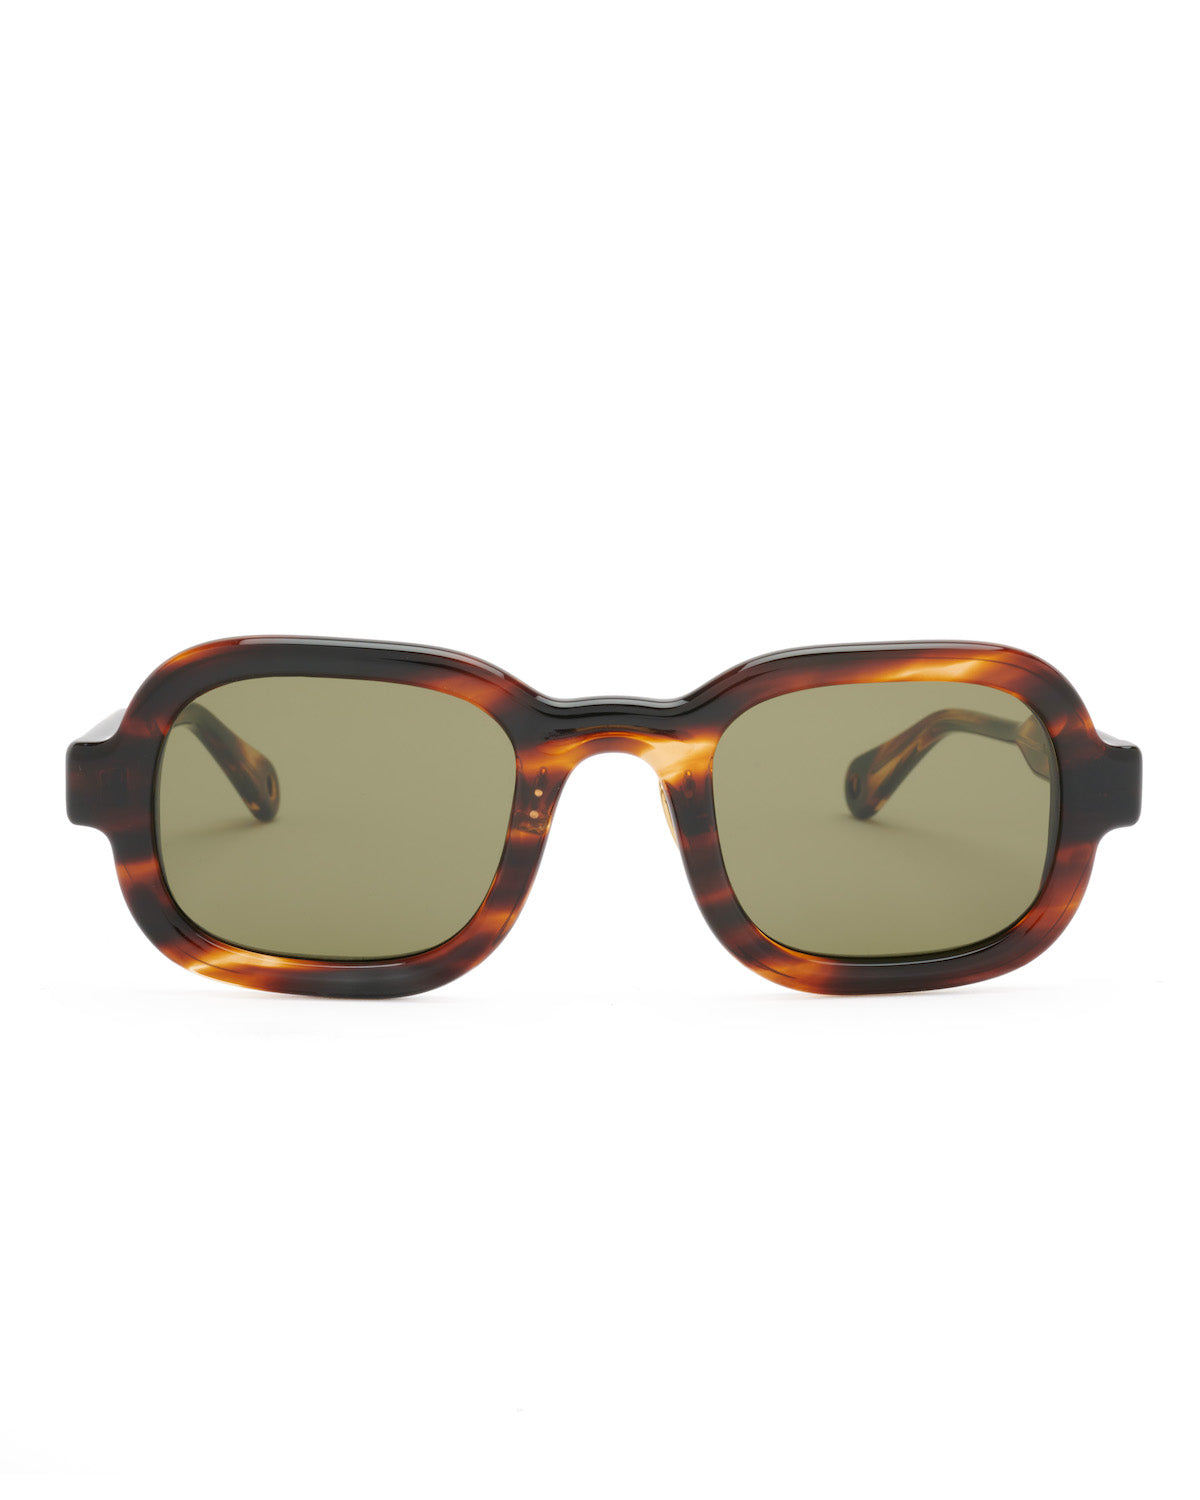 Newman Post Modern Primitive Eye Protection Sunglasses - Havana/Green 1